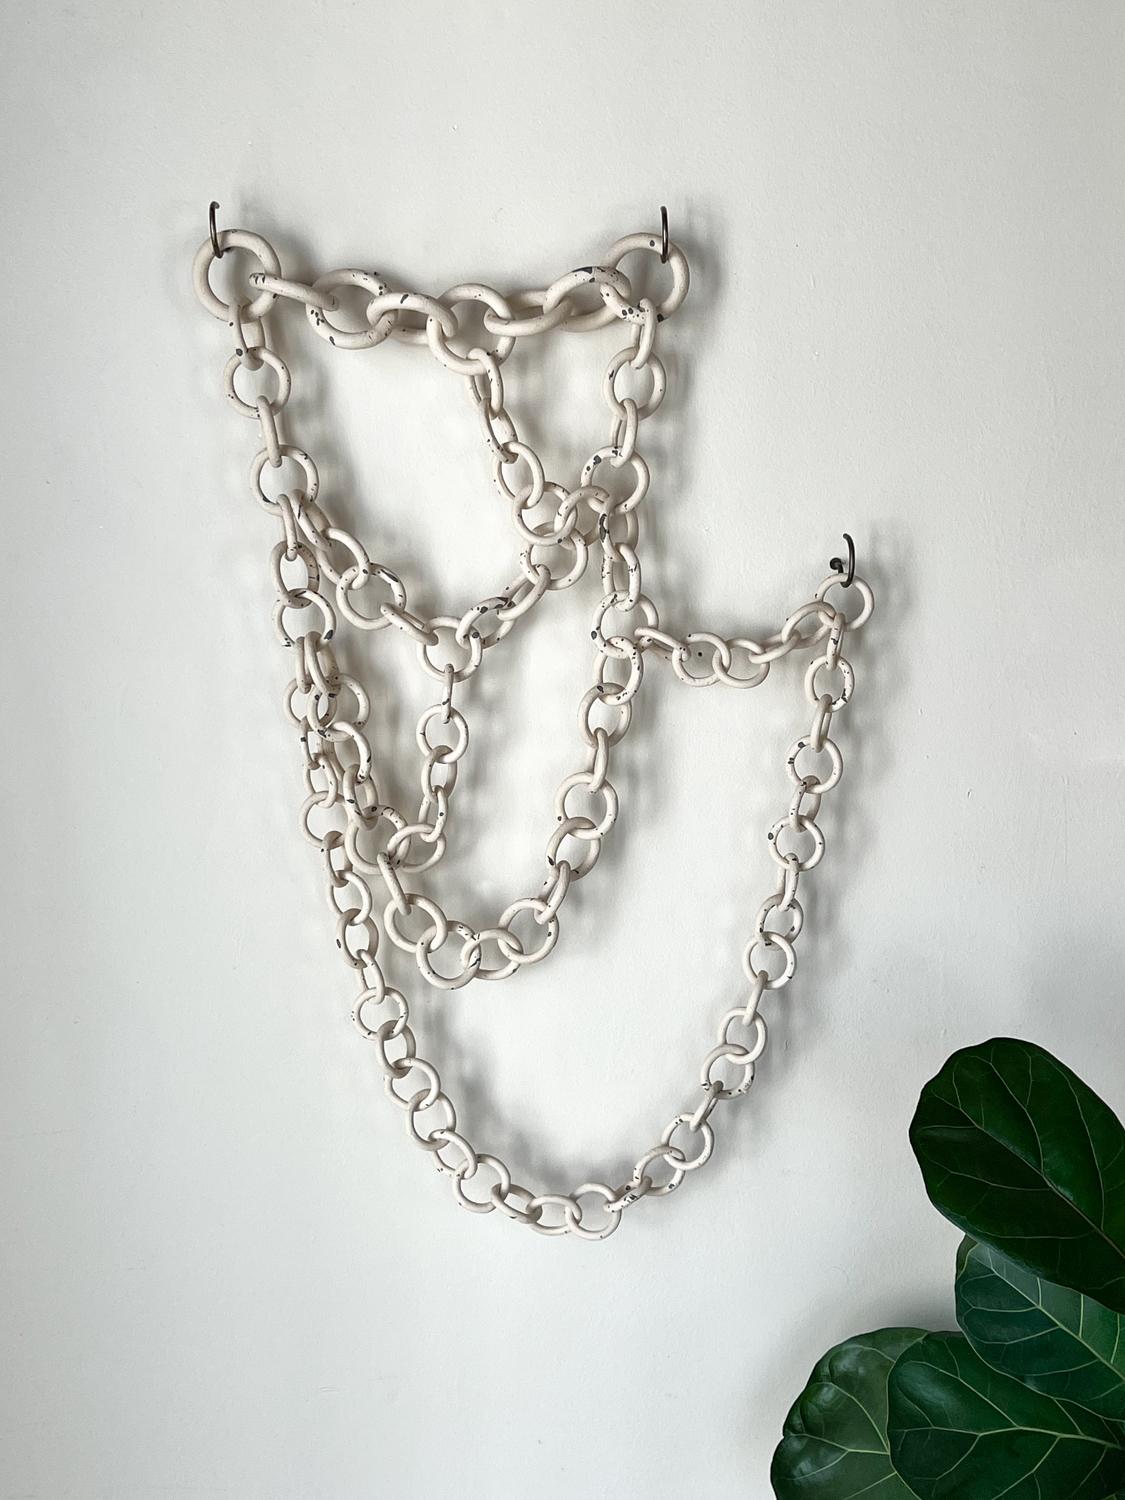 Bohemian white Ceramic Link Chain Wall Sculpture